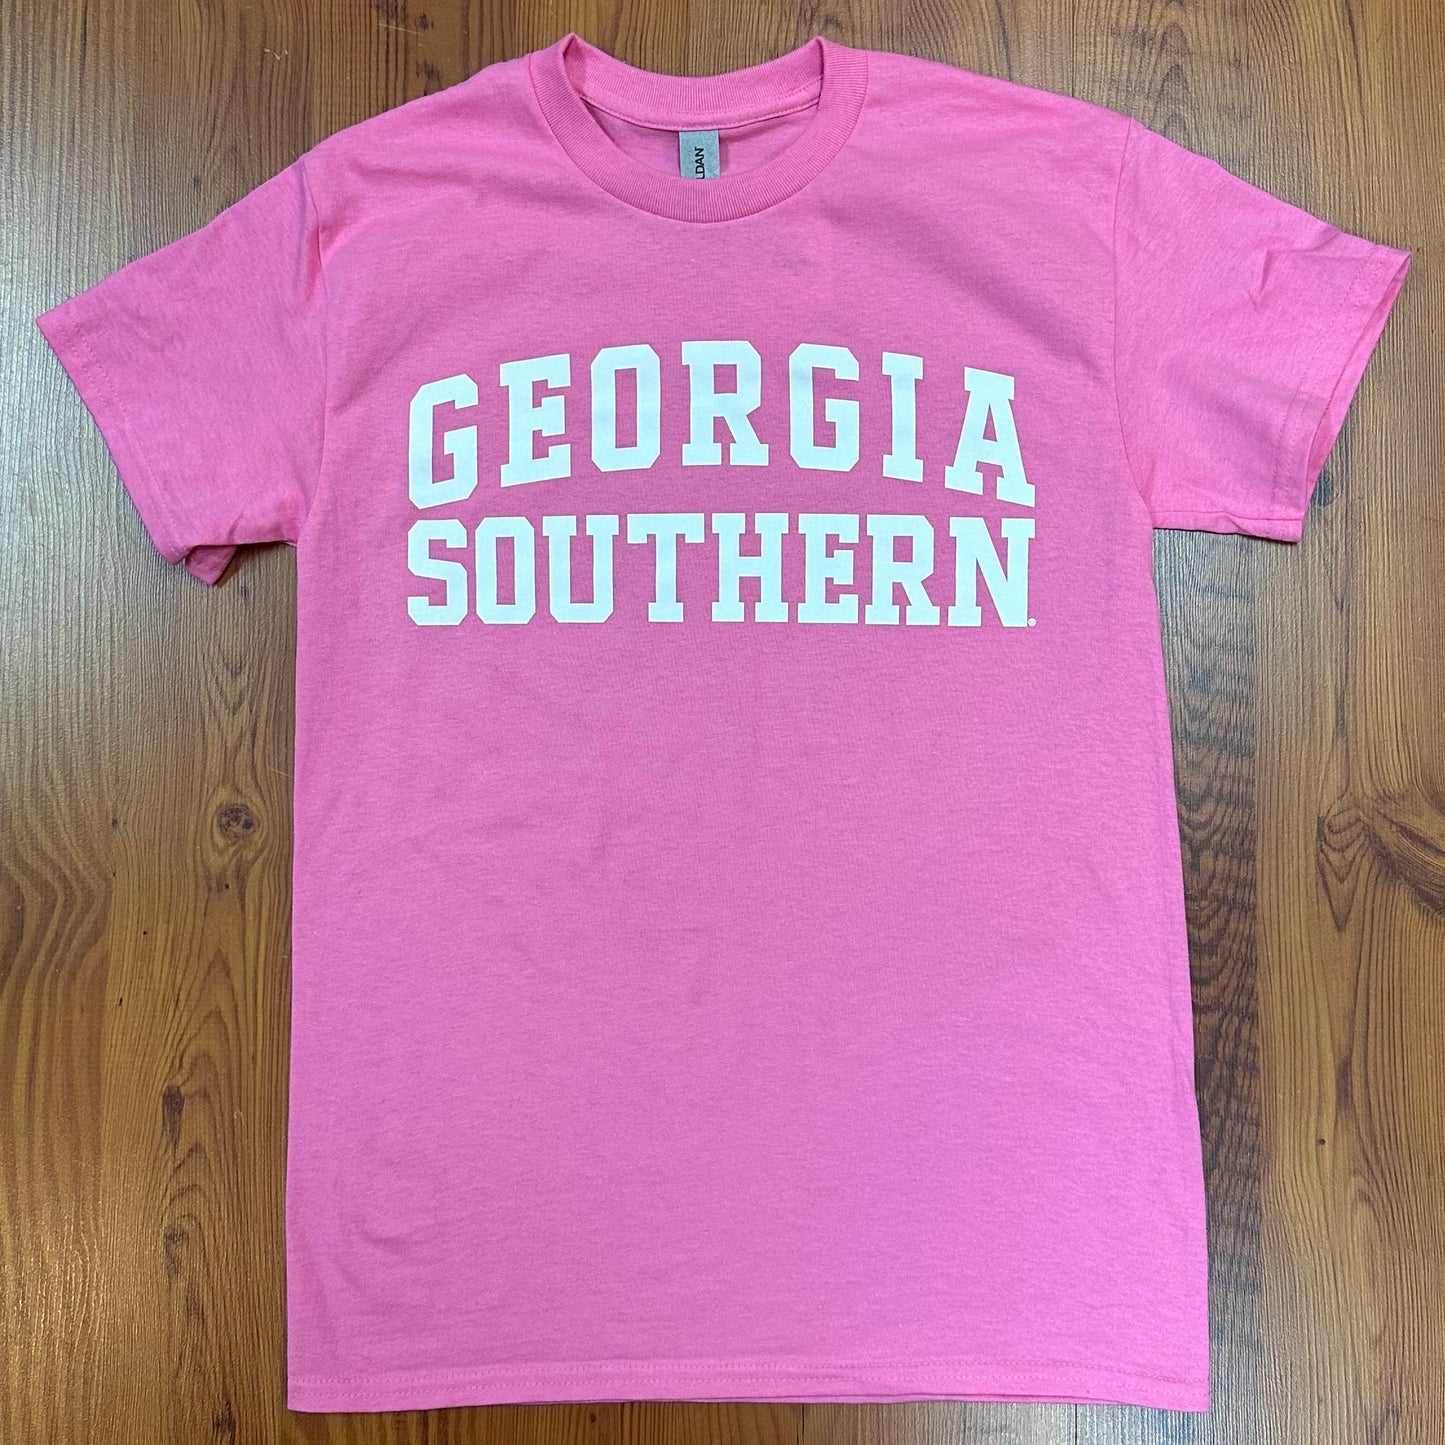 Georgia Southern Collegiate Arch - Pink Tee